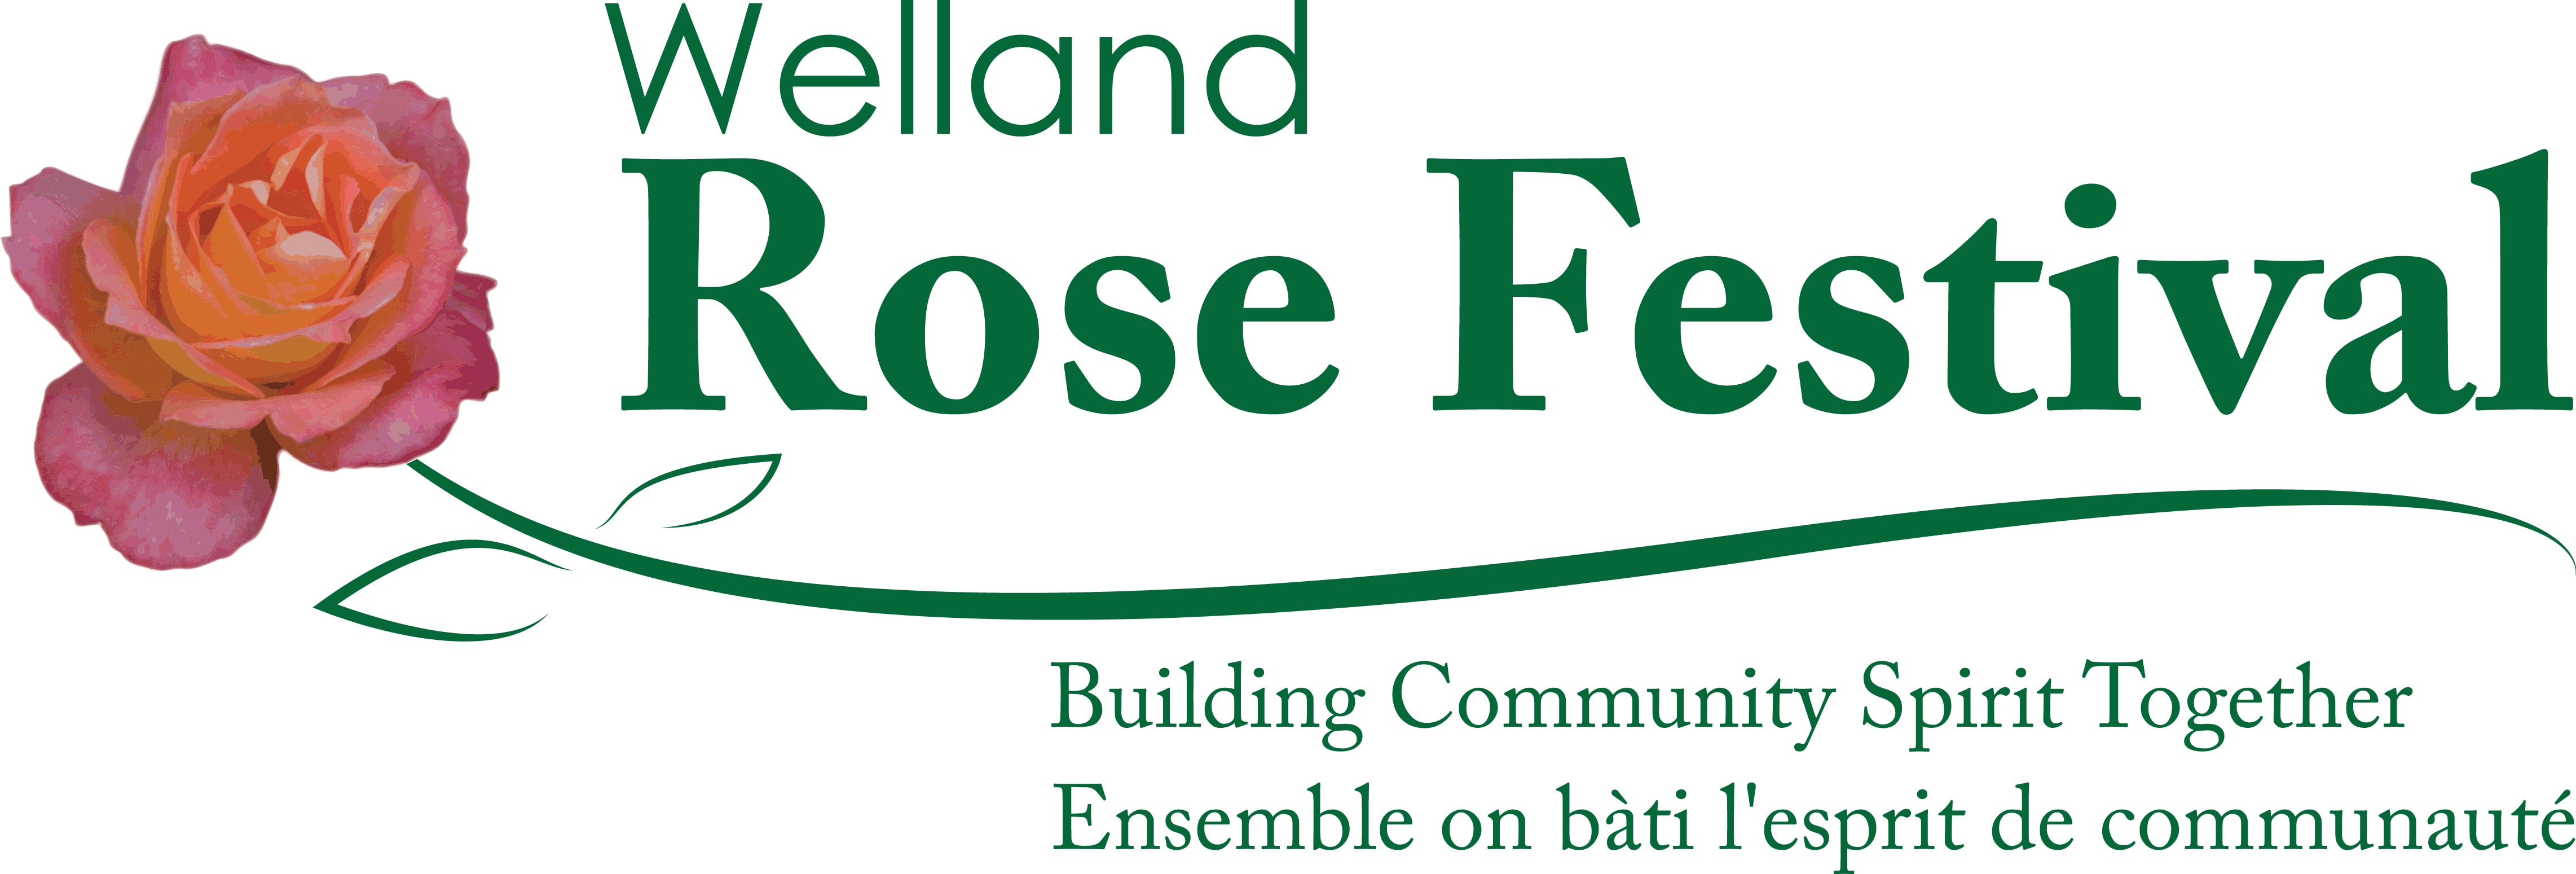 Welland Rose Festival logo